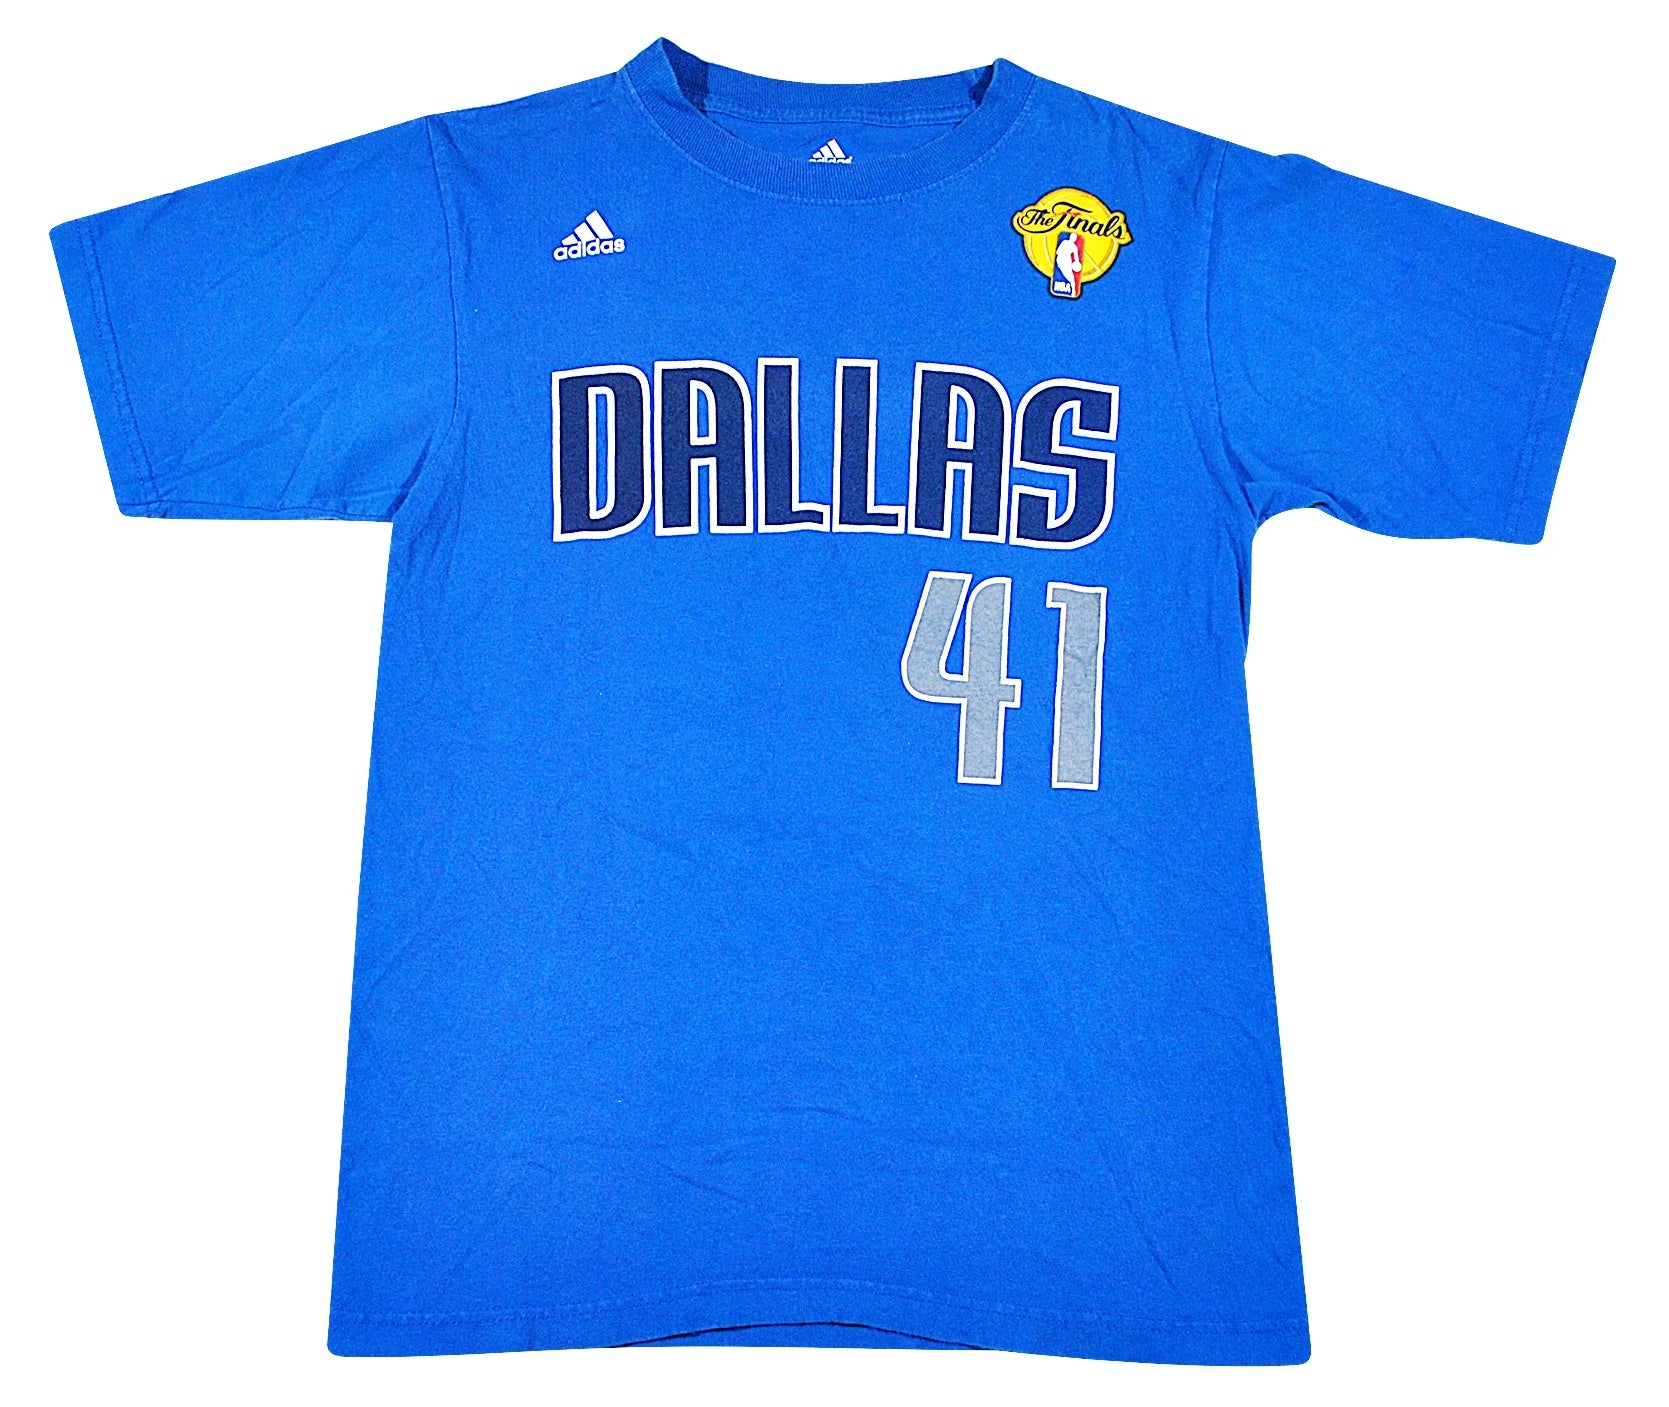 Dirk Nowitzki Dallas Mavericks NBA Jerseys for sale